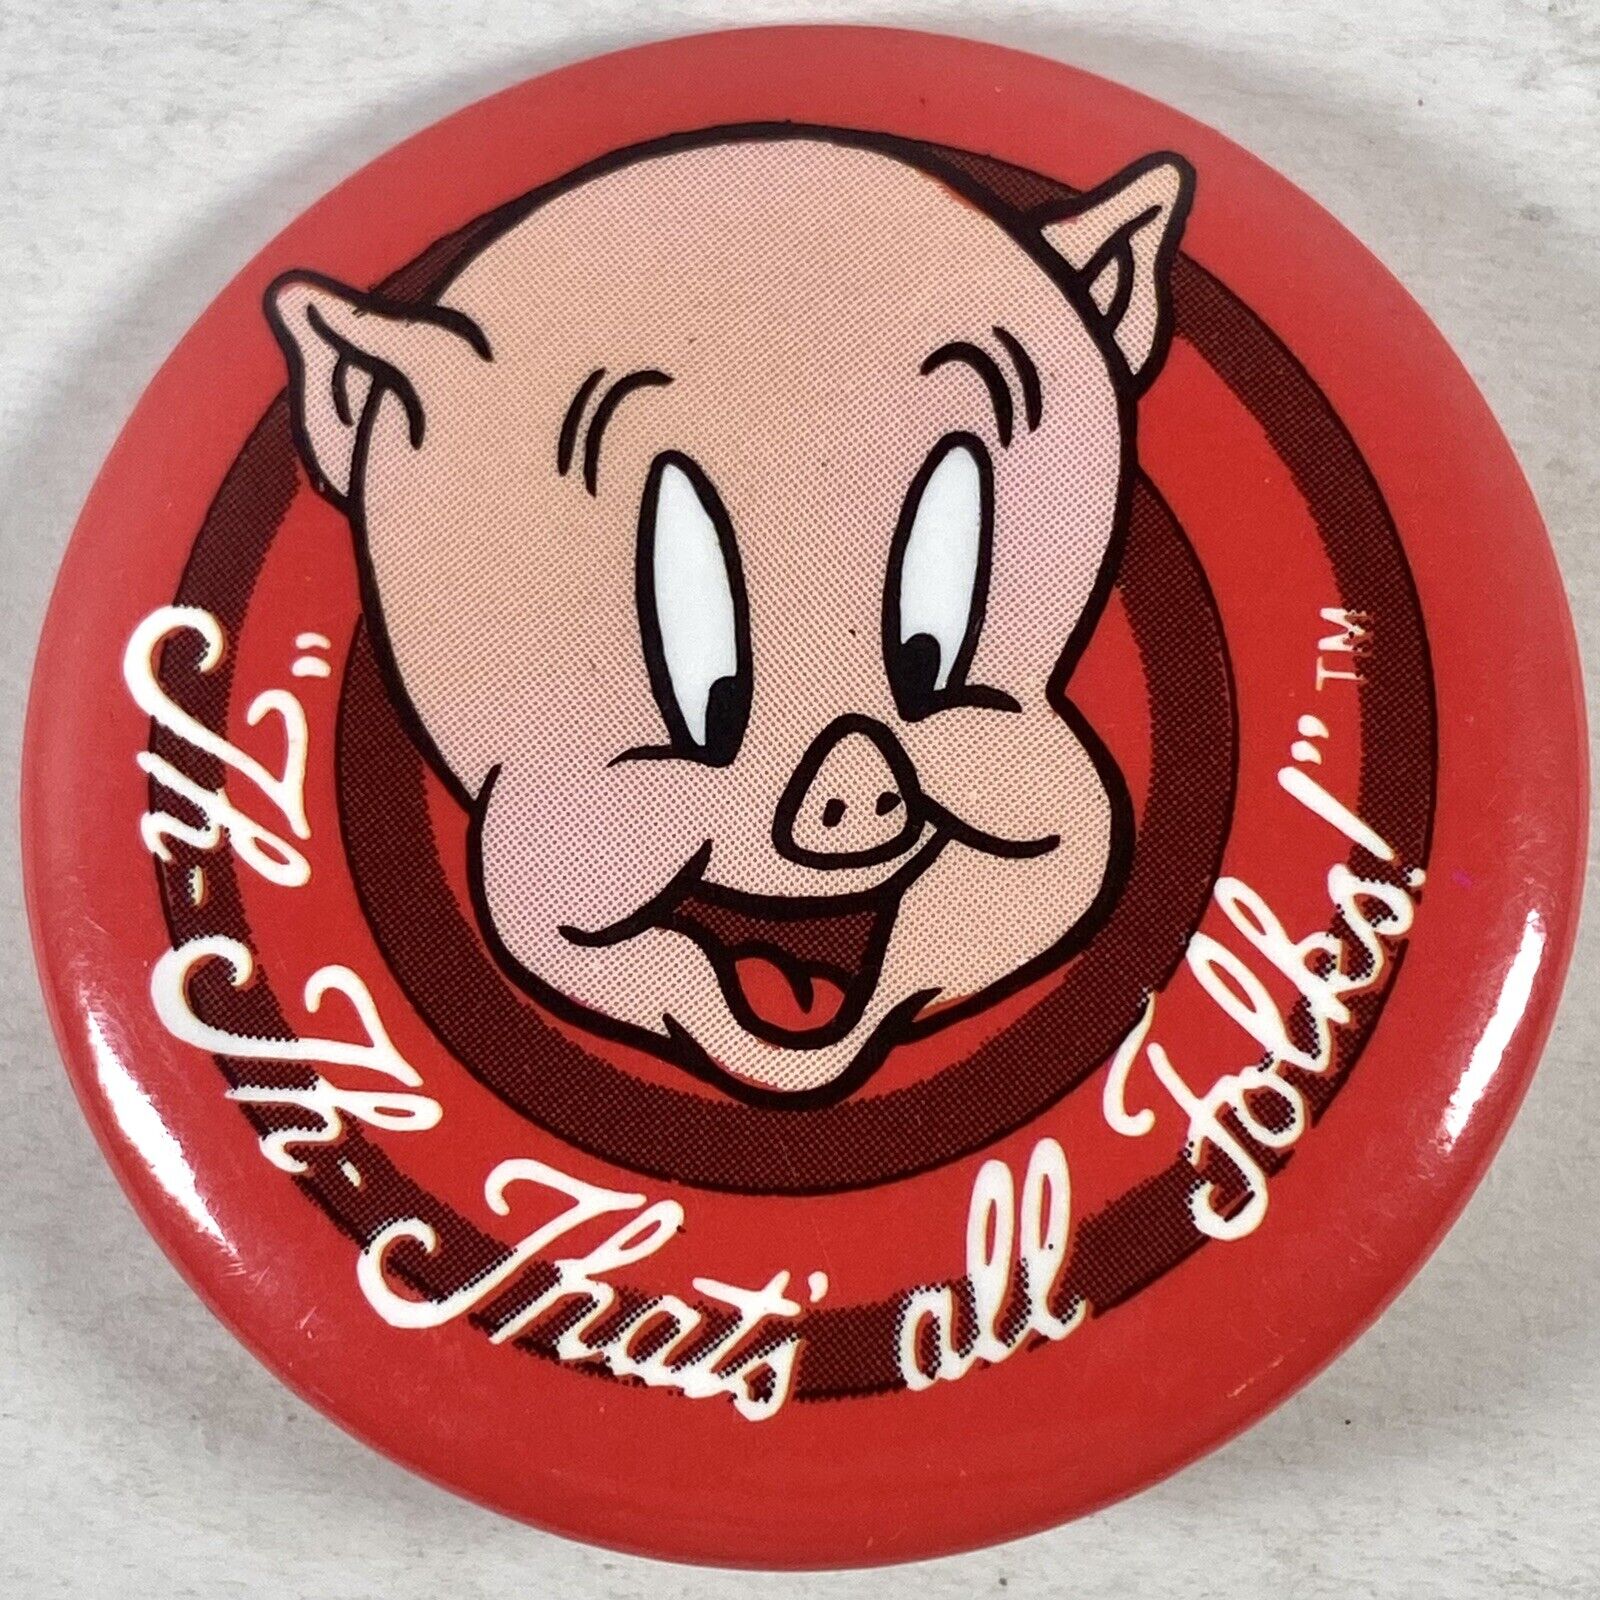 Porky Pig Th-Th- That’s All Folks Vintage Button Pin 1989 Warner Bros Pinback